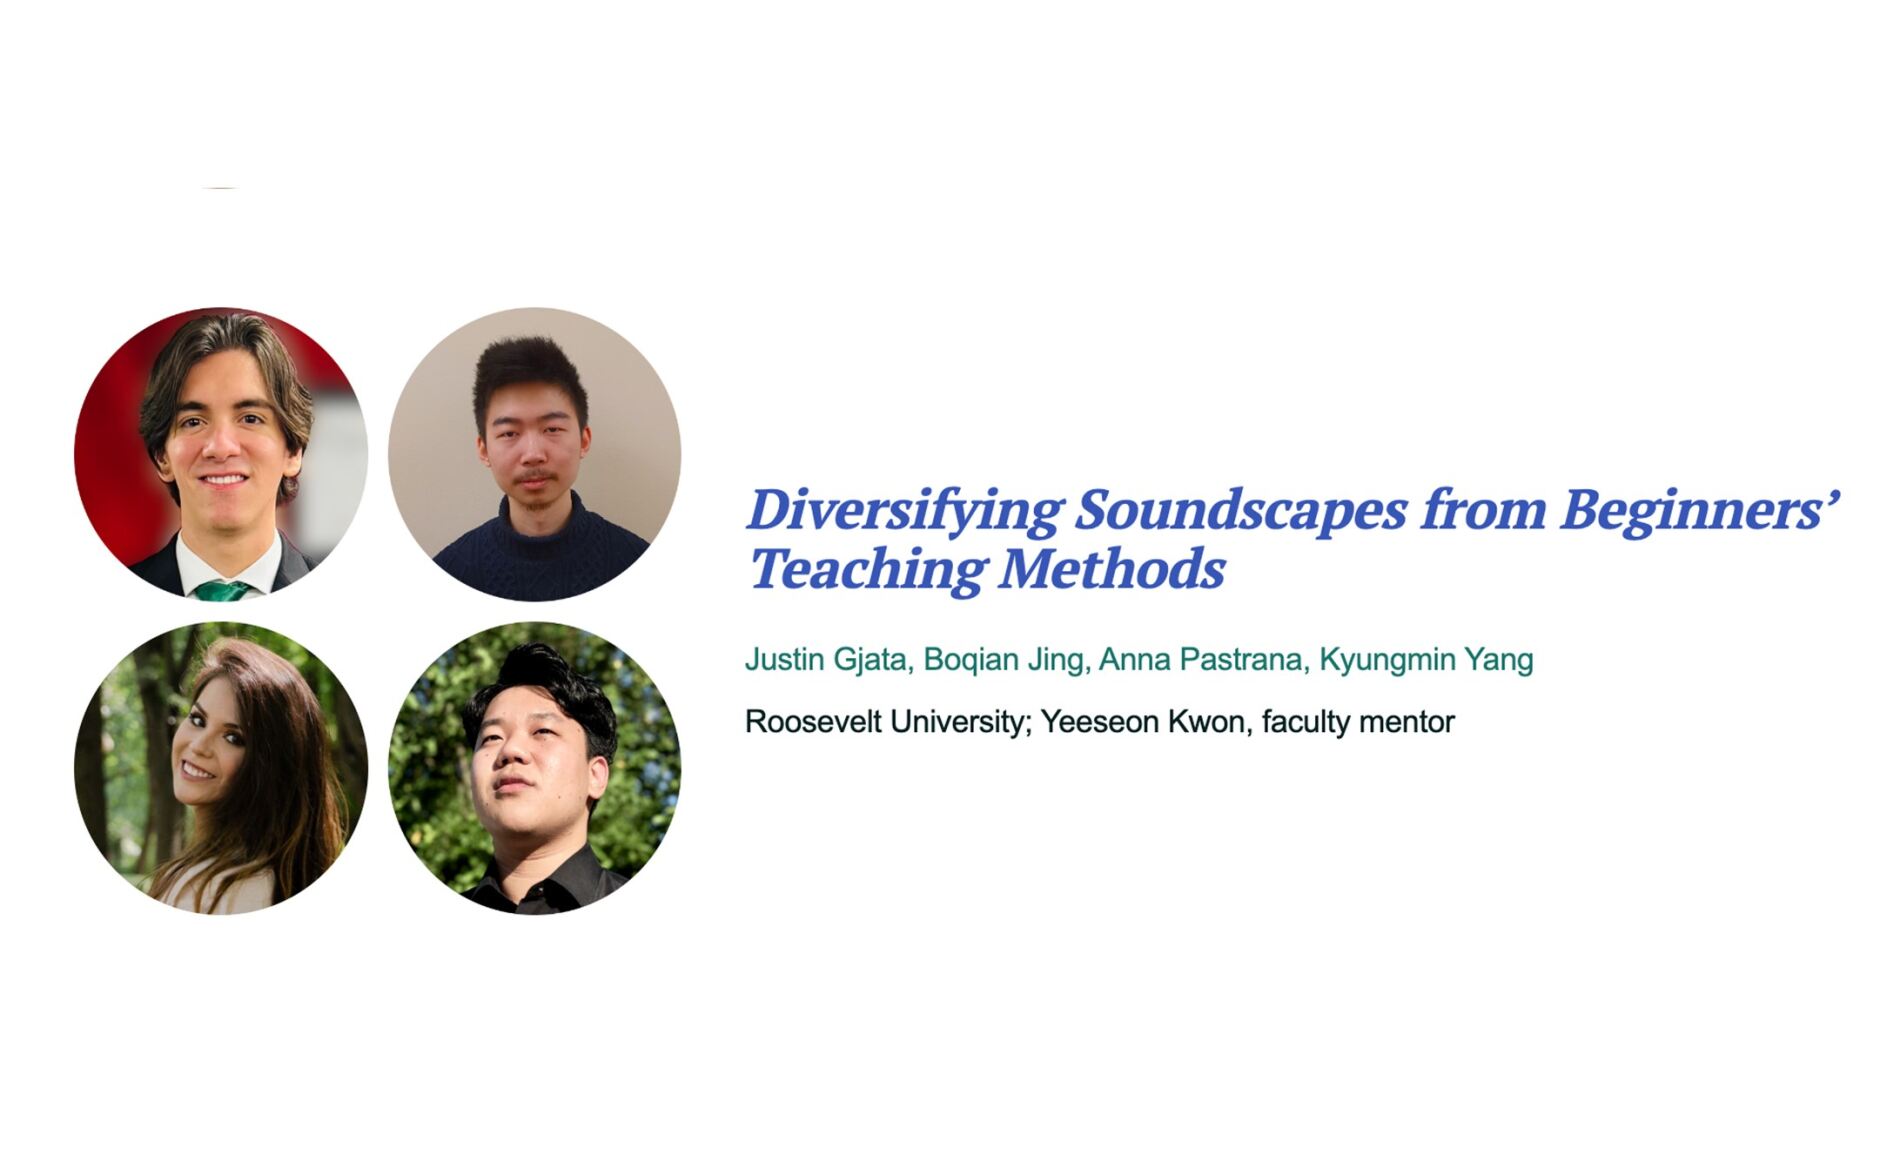 Keyboard Pedagogy webinar by Justin Gjata, Boqian Jing, Anna Pastrana, Kyungmin Yang